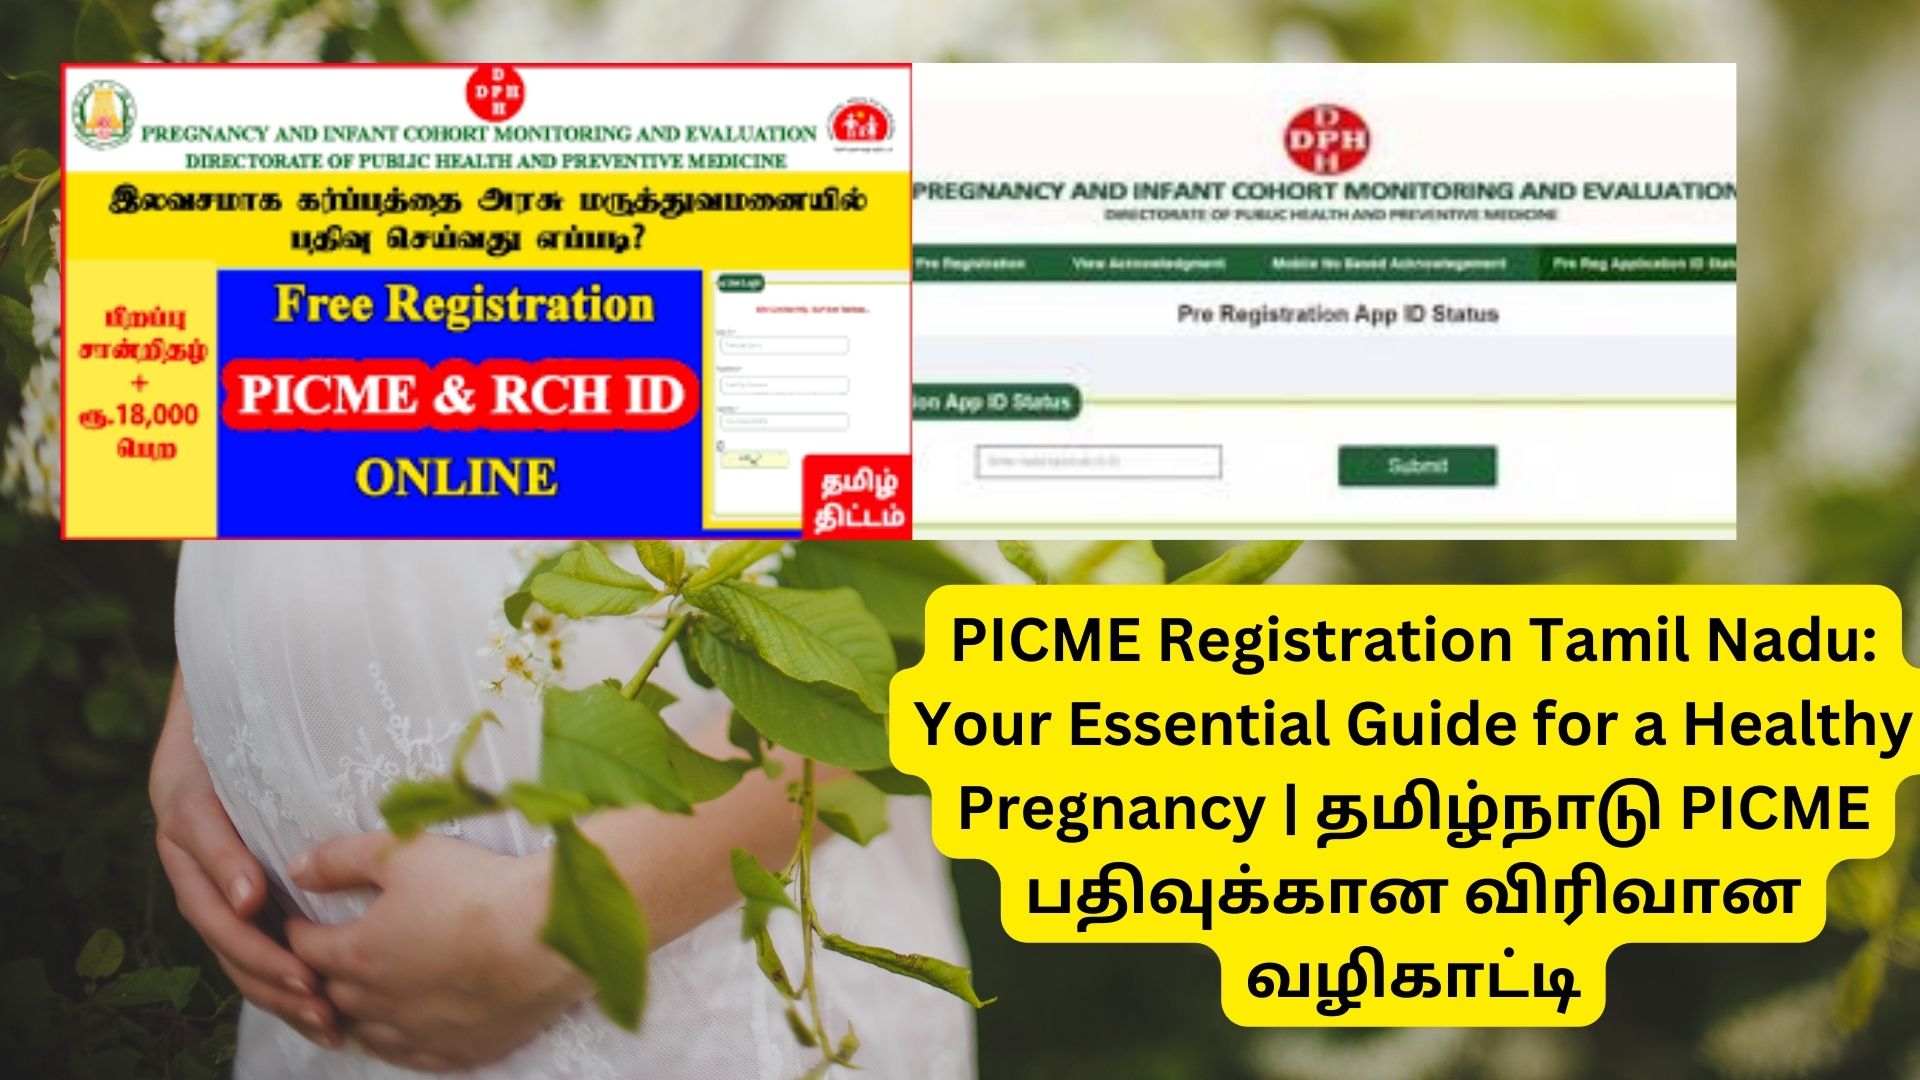 PICME Registration Tamil Nadu: Your Essential Guide for a Healthy Pregnancy | தமிழ்நாடு PICME பதிவுக்கான விரிவான வழிகாட்டி